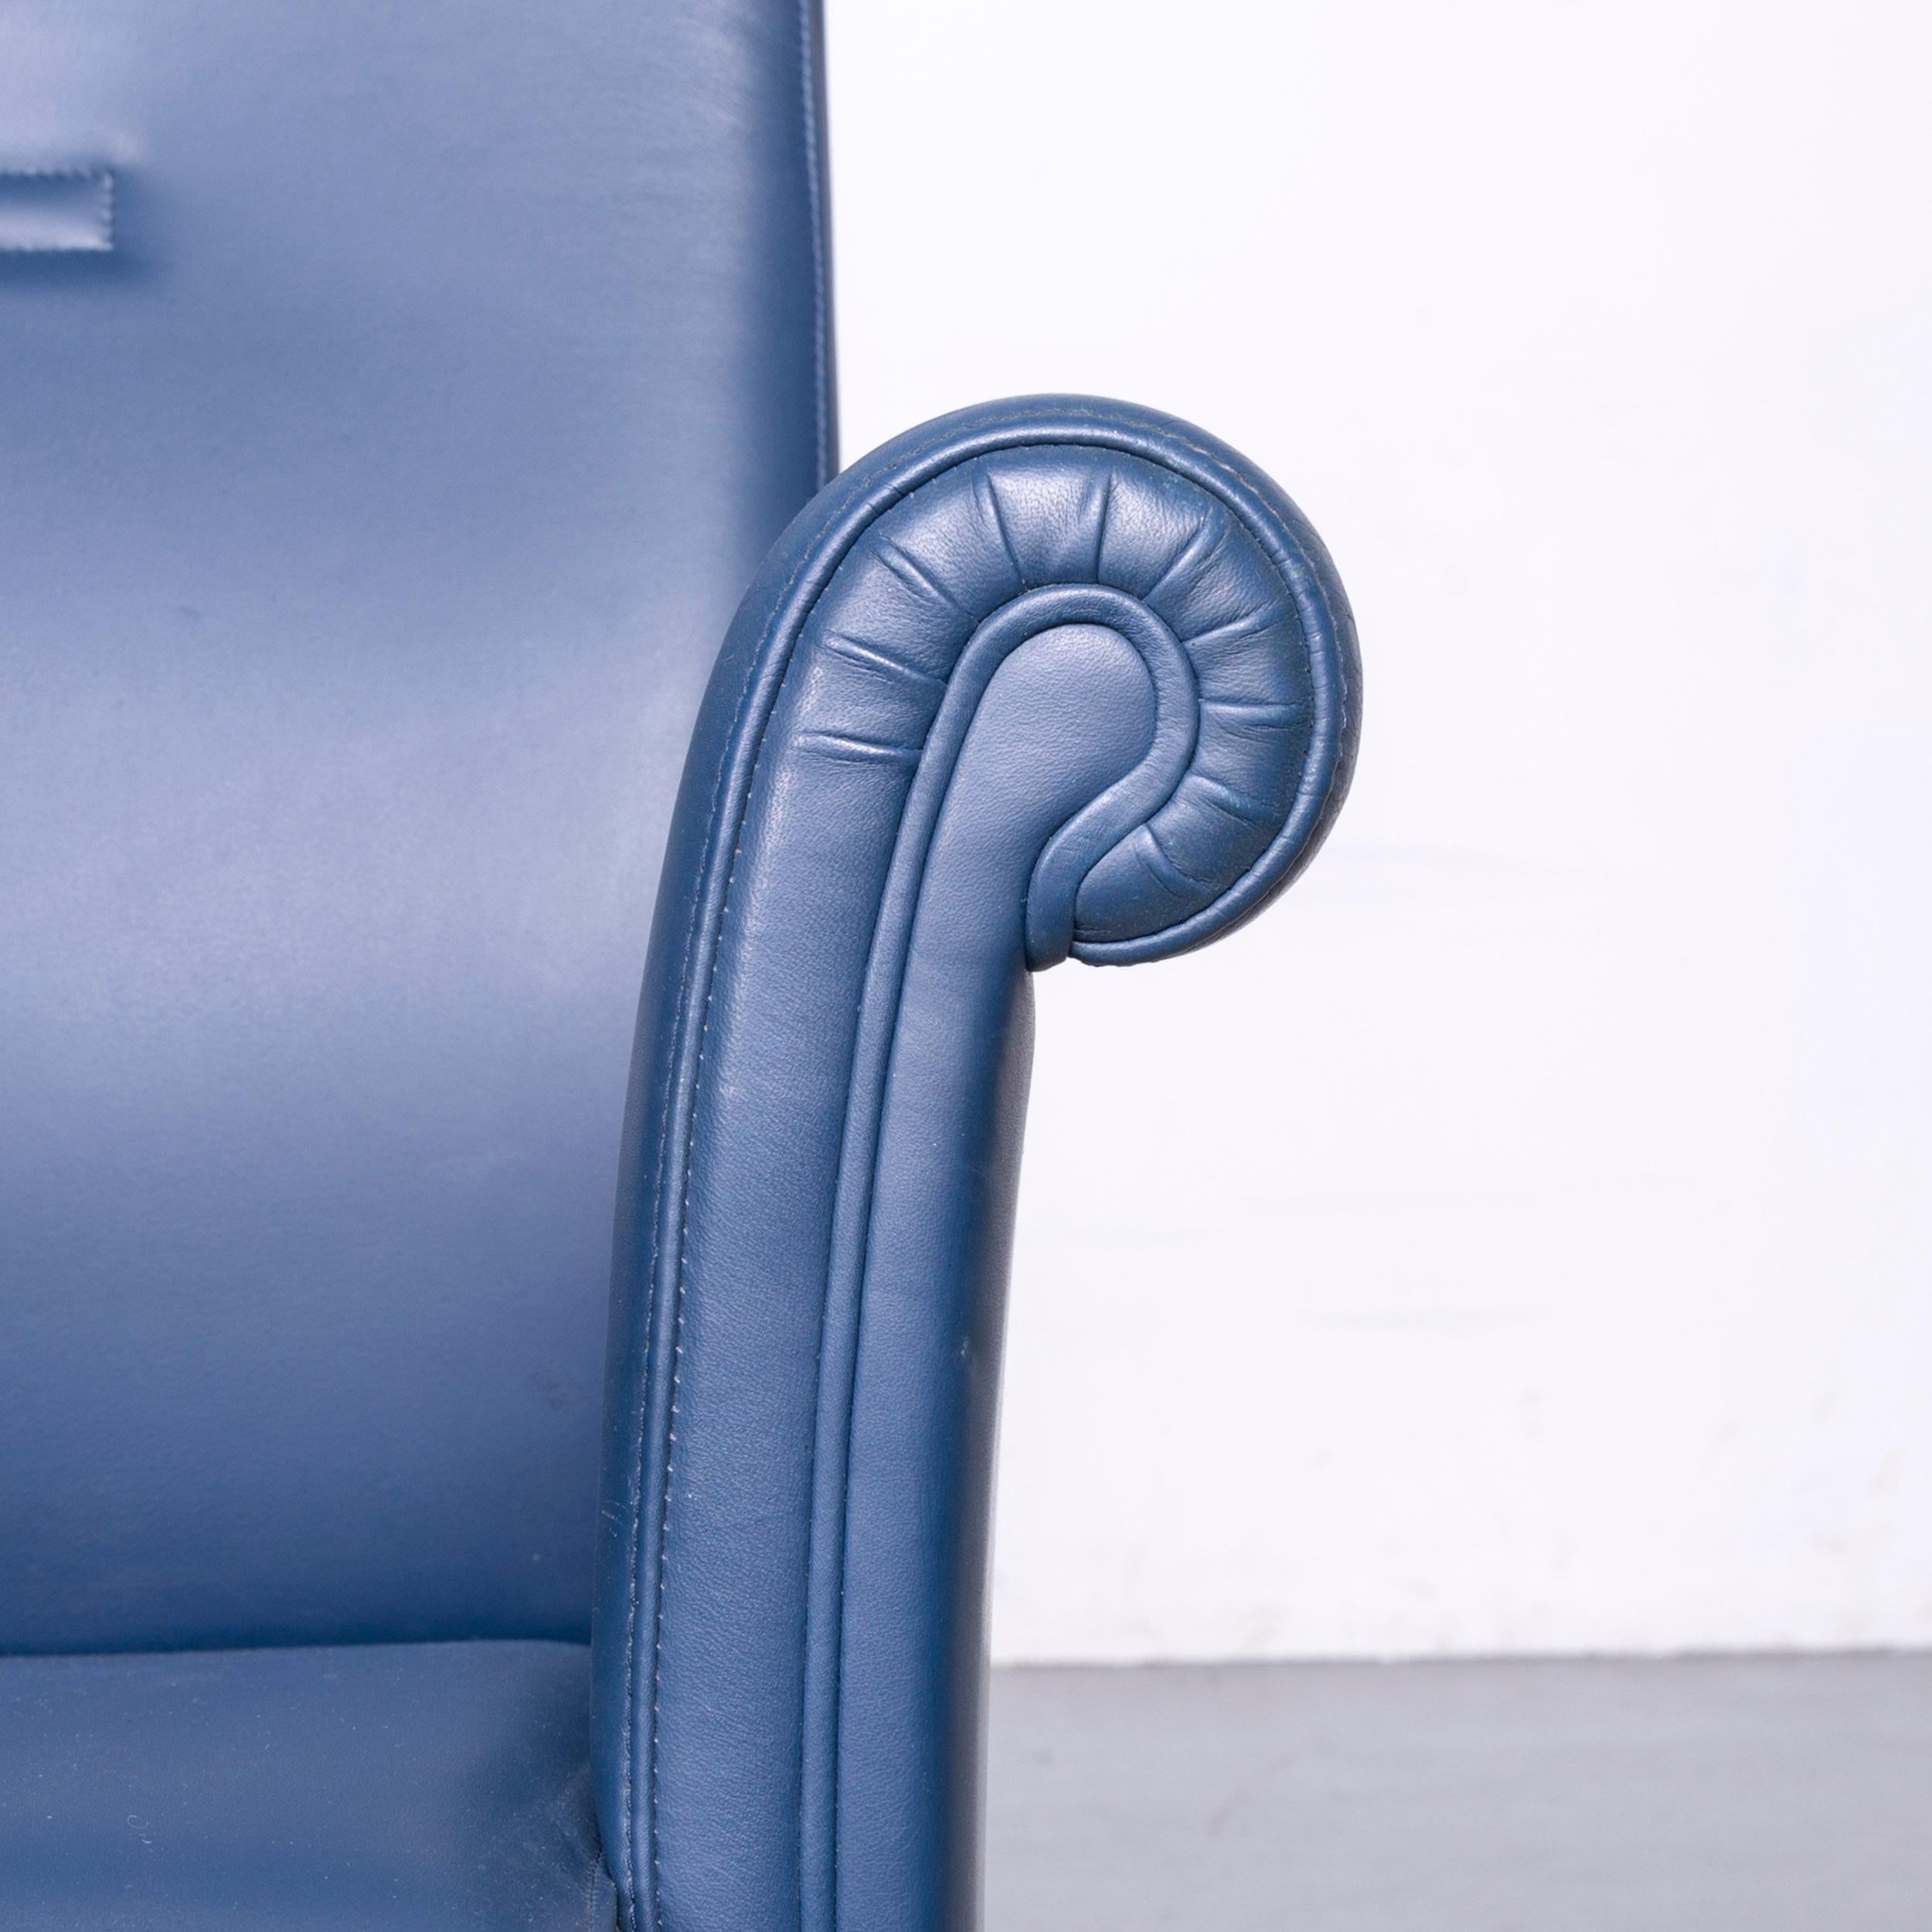 Chesterfield Poltrona Frau Forum Bridge Designer Leather Armchair Blue One-Seat For Sale